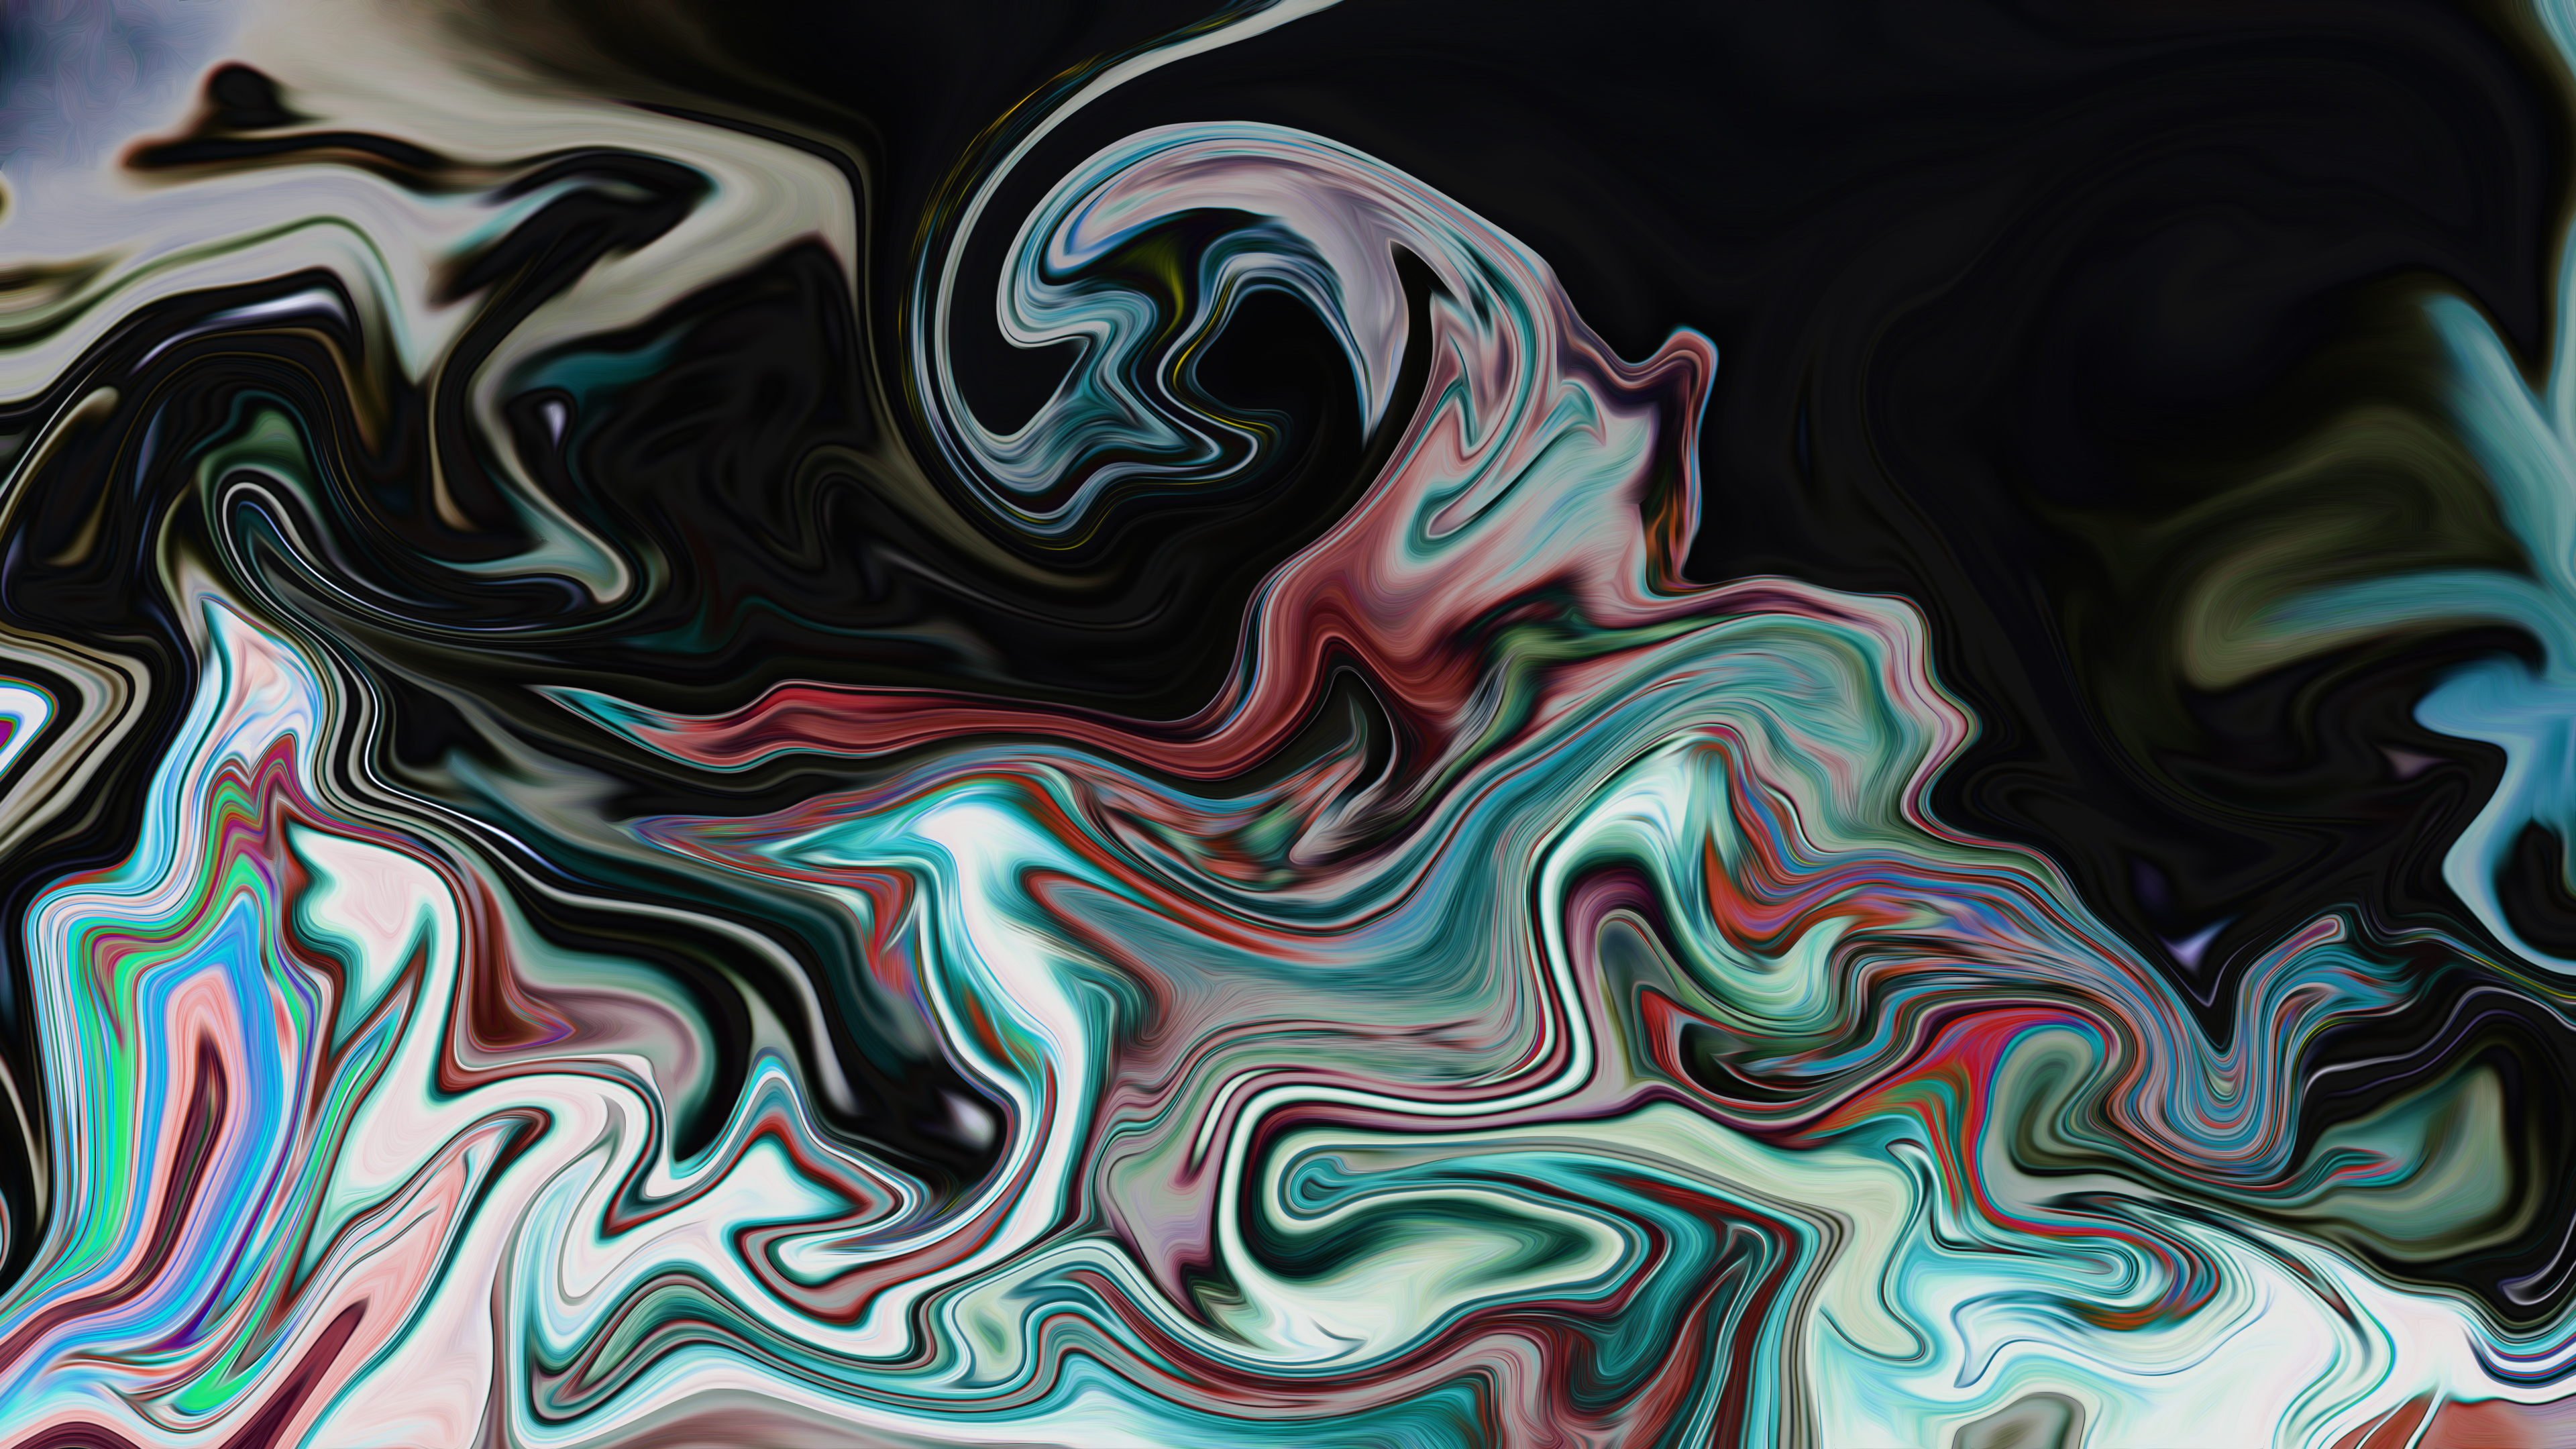 Abstract Fluid Liquid Illustration Graphic Design Artwork Digital Art Shapes Colorful Oil Painting B 3840x2160